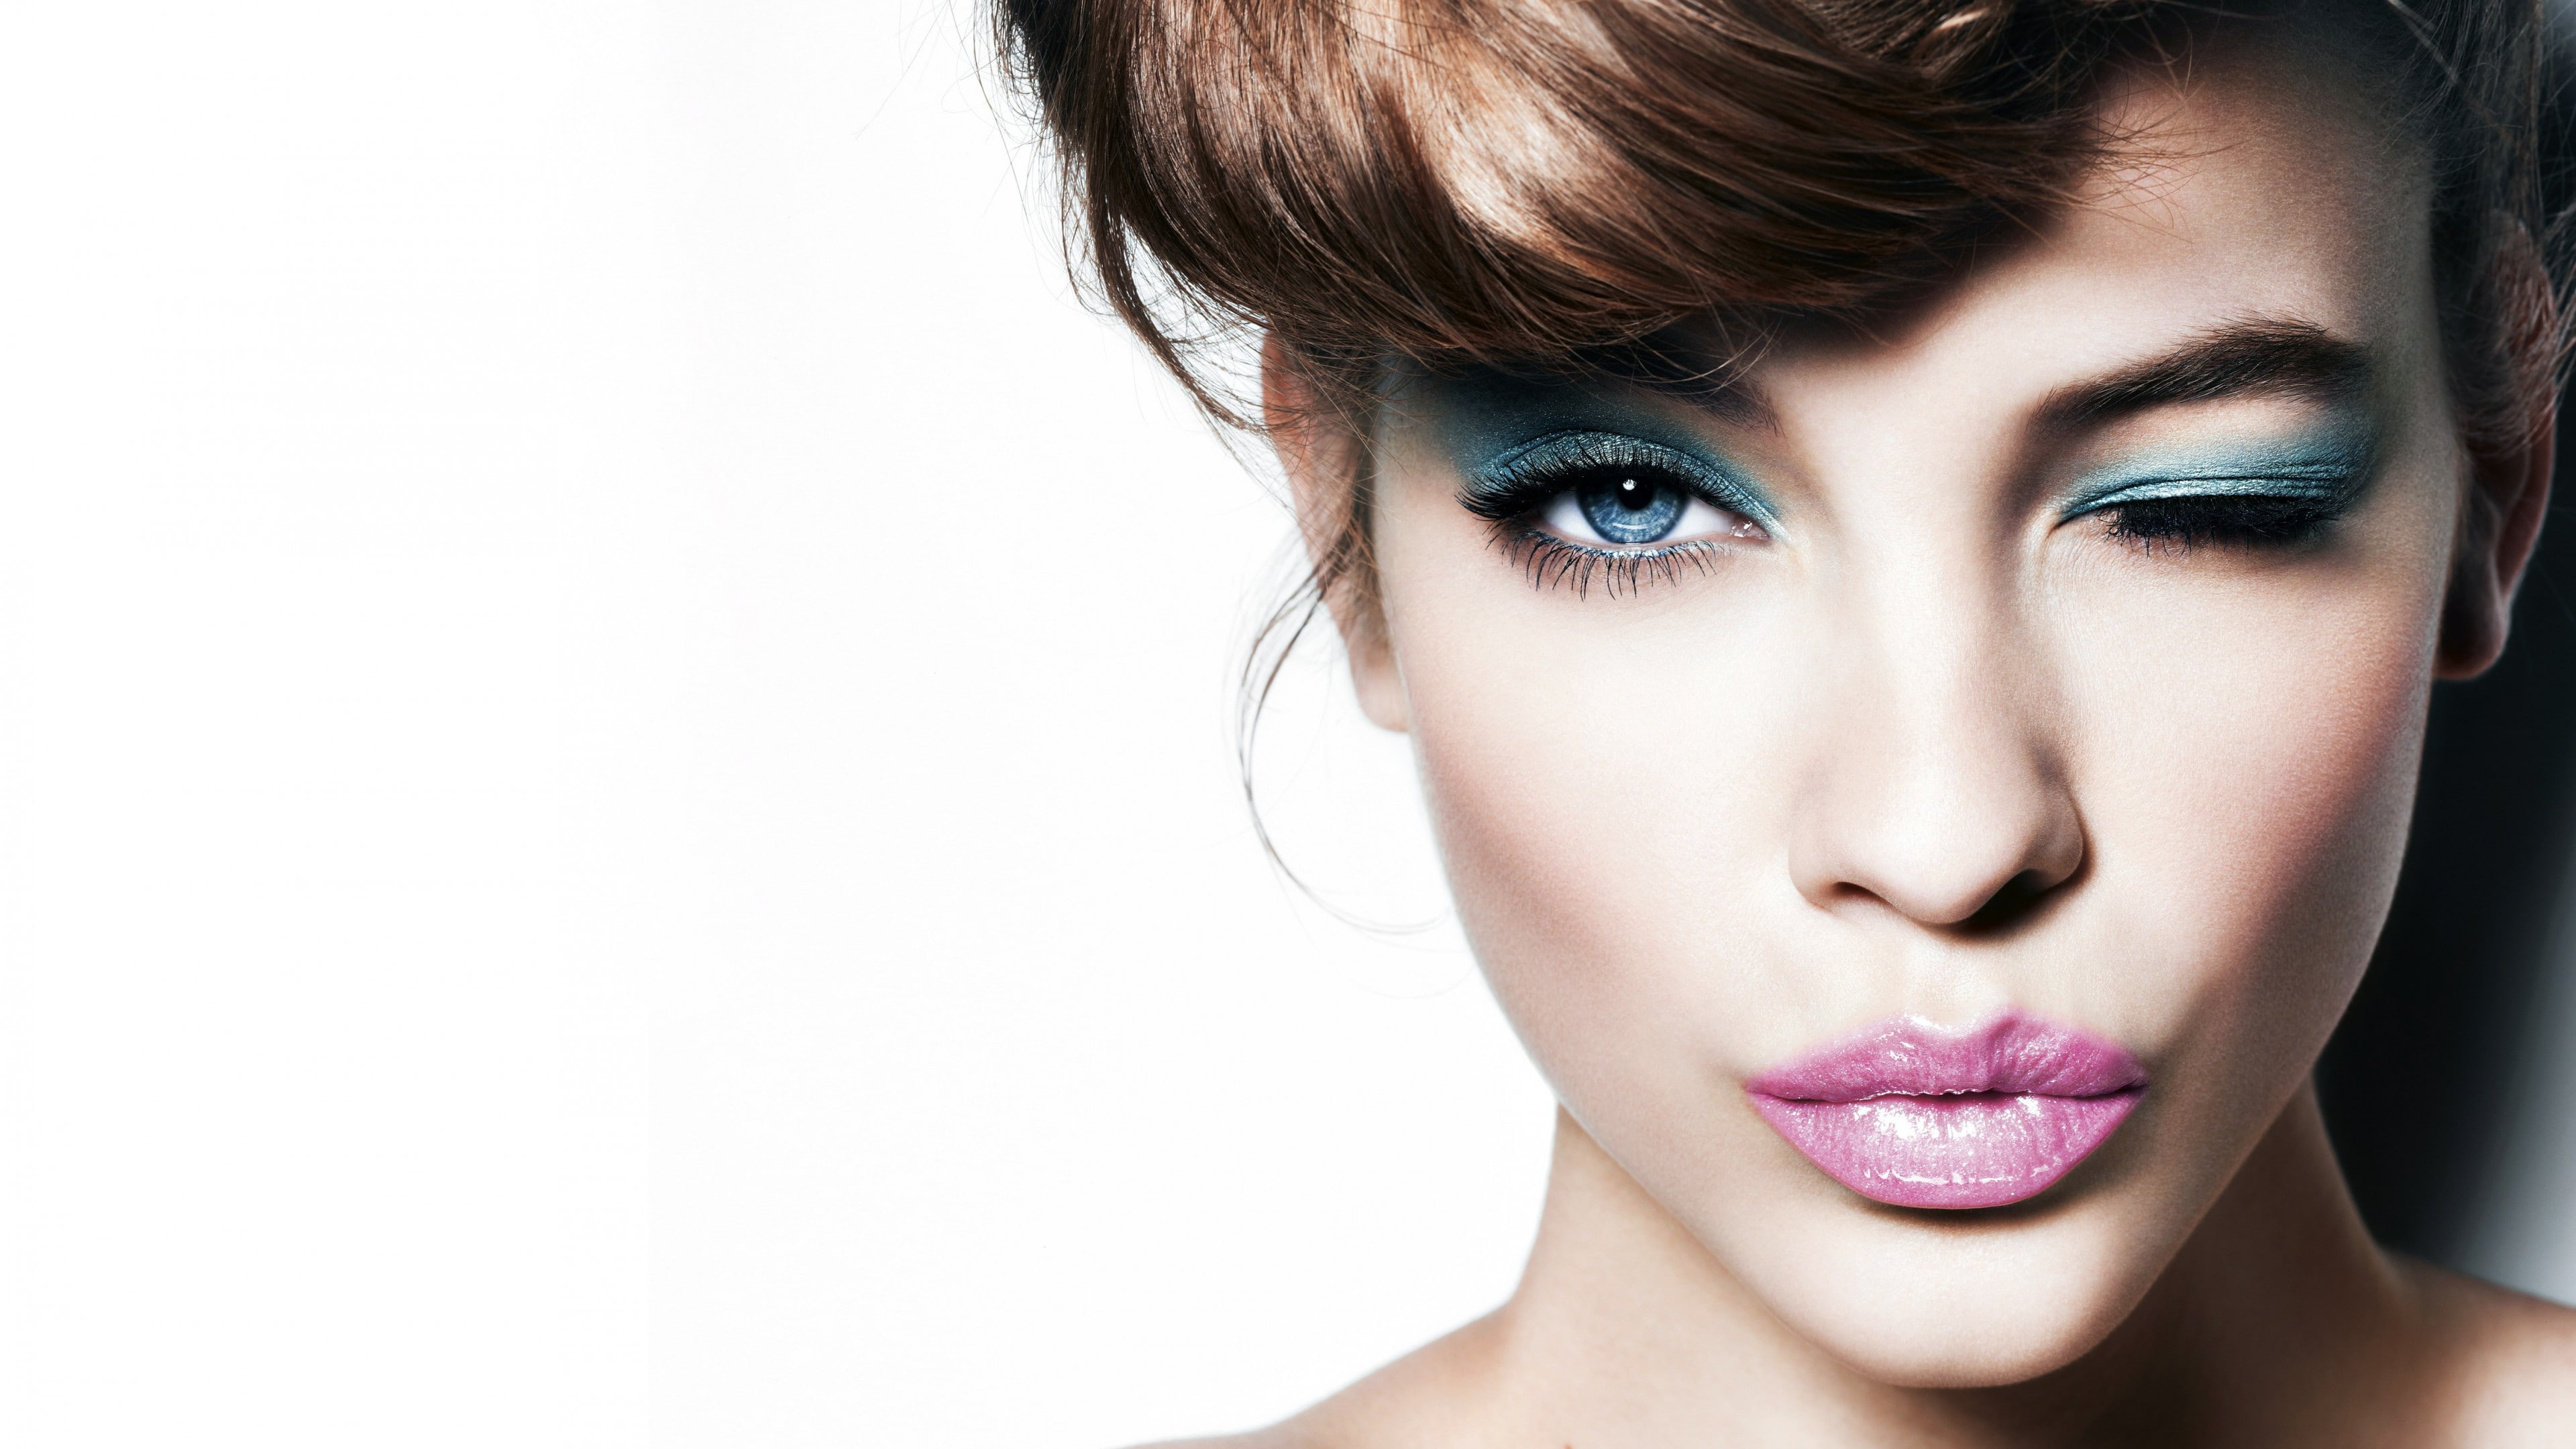 woman with purple lipstick and blue eyeshadow, Barbara Palvin